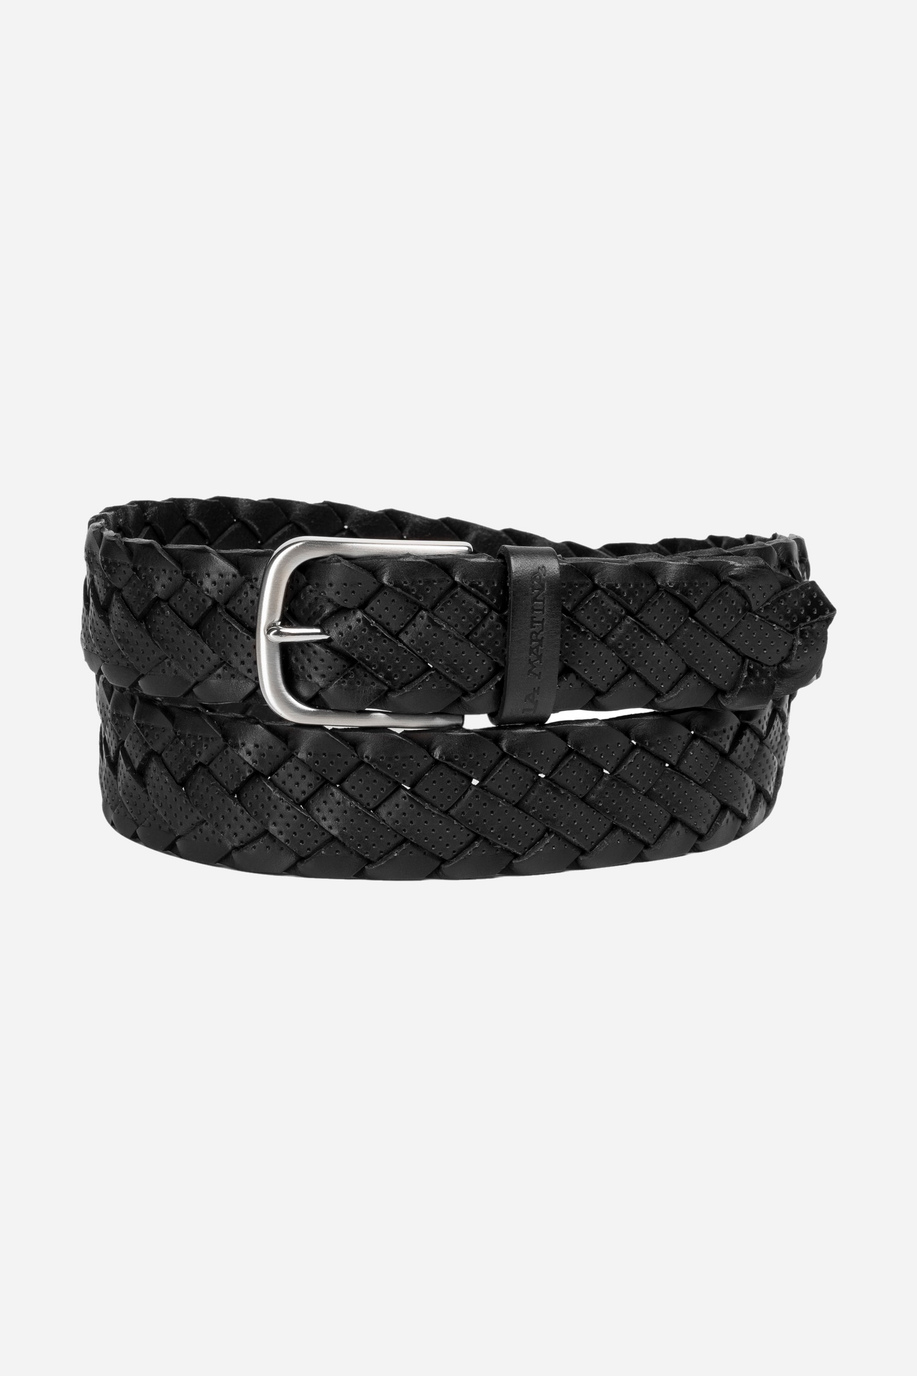 Men's belt in woven leather - Accessories | La Martina - Official Online Shop